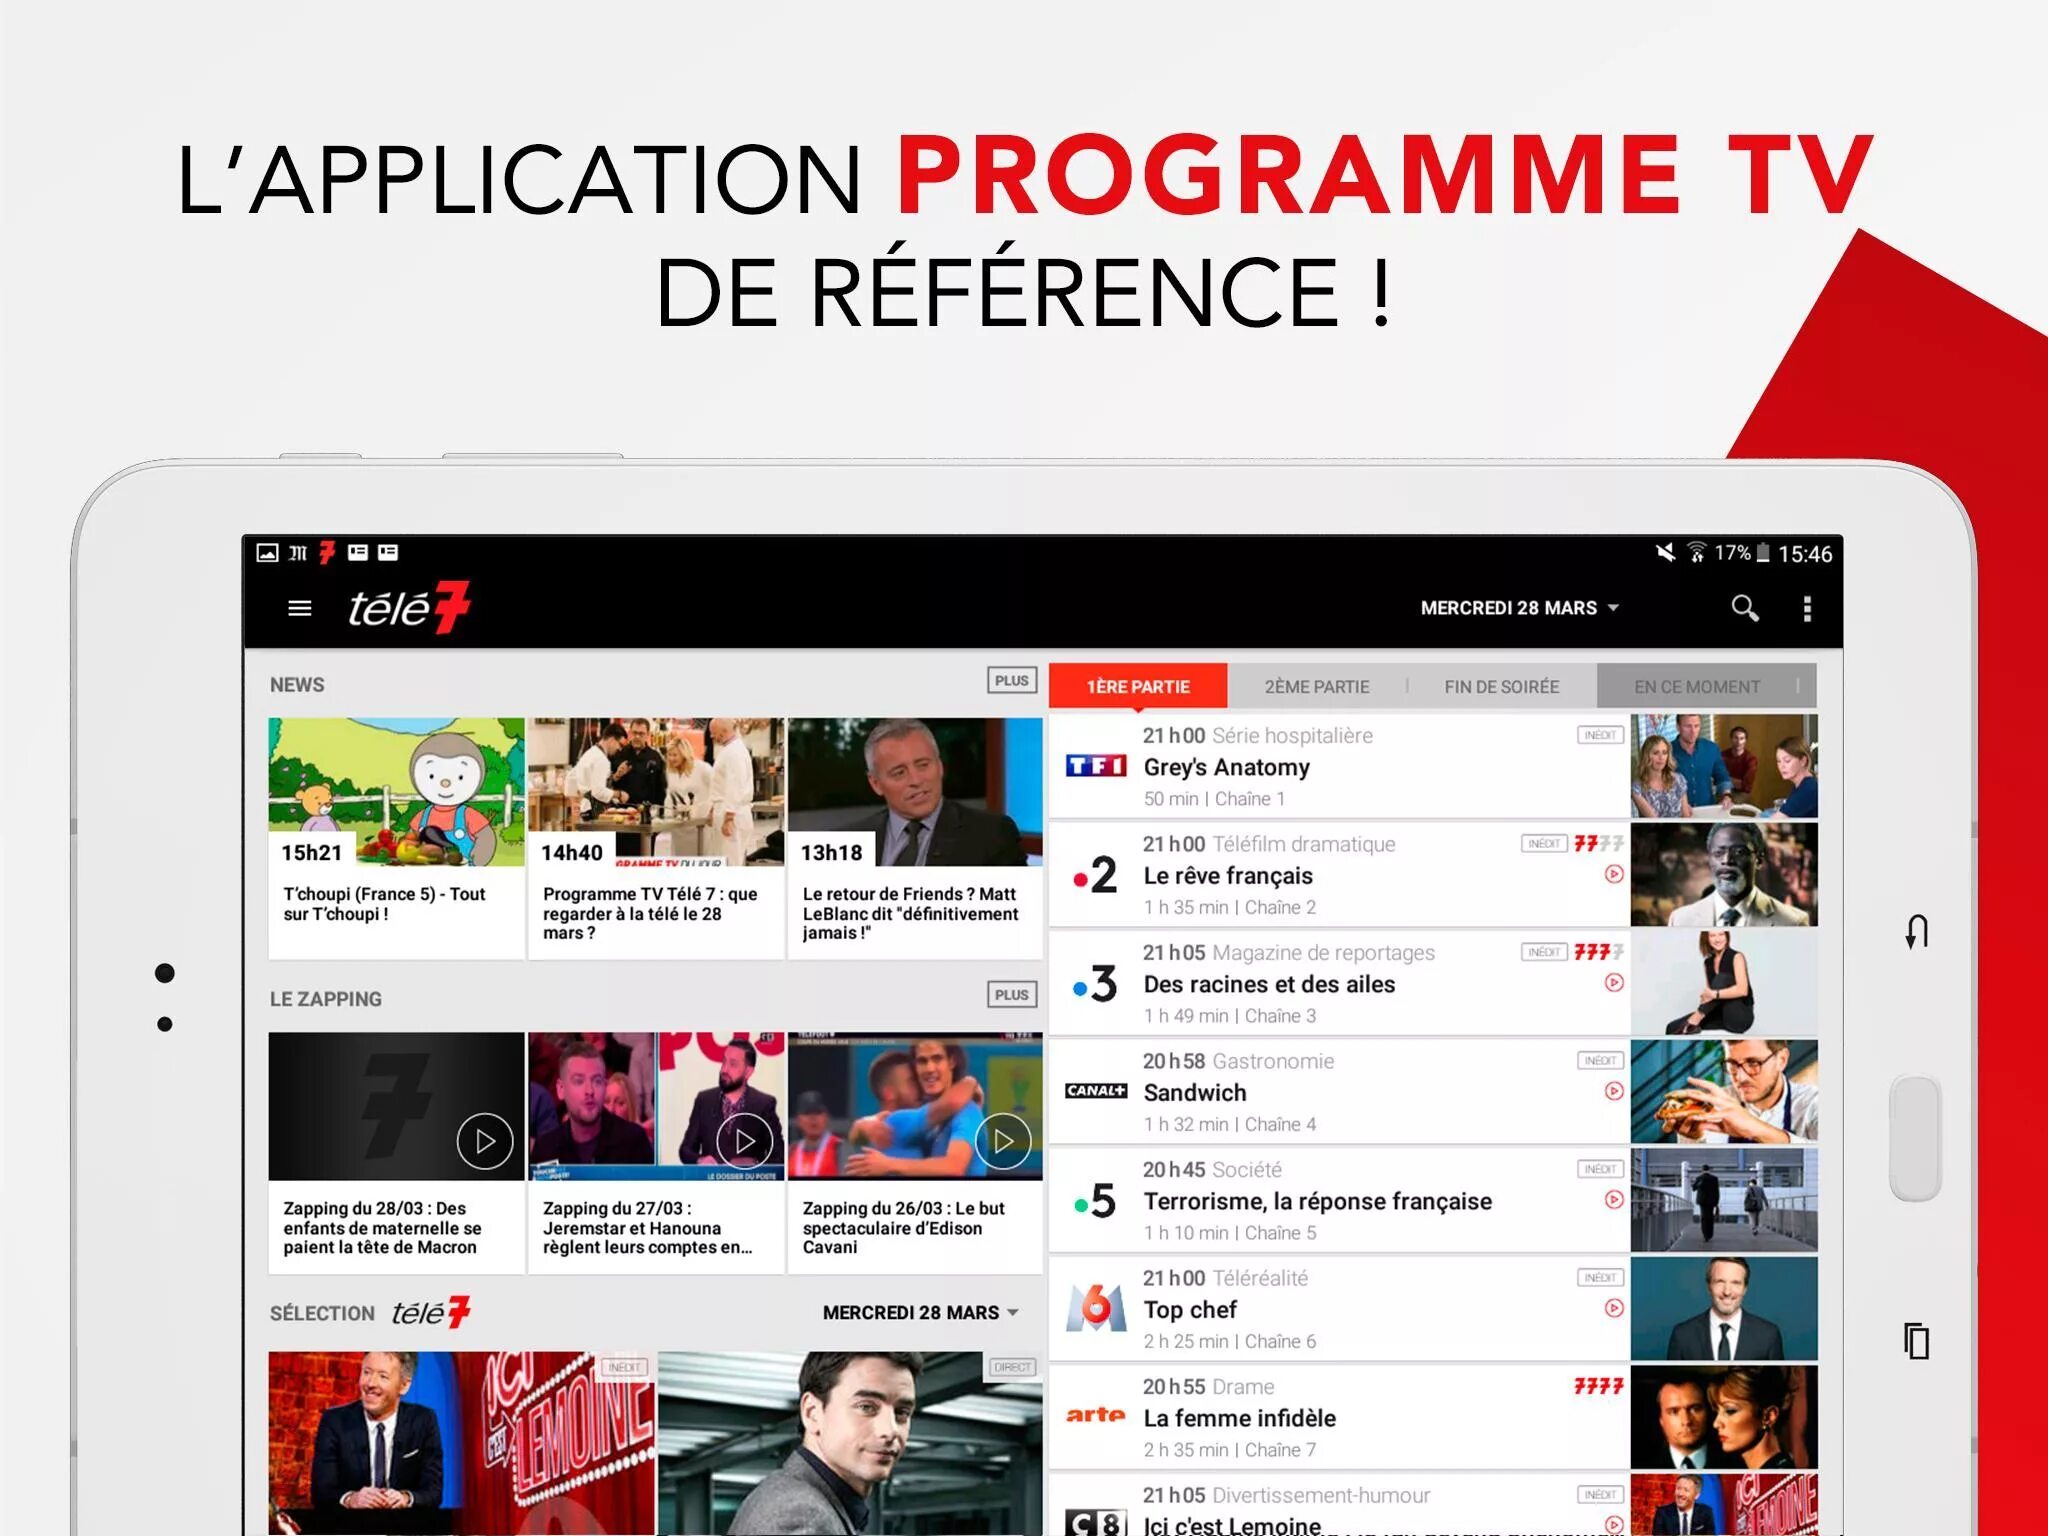 Новое теле 7. TV programmes. TV programmes на английском. Programme TV France. Famous TV programmes.